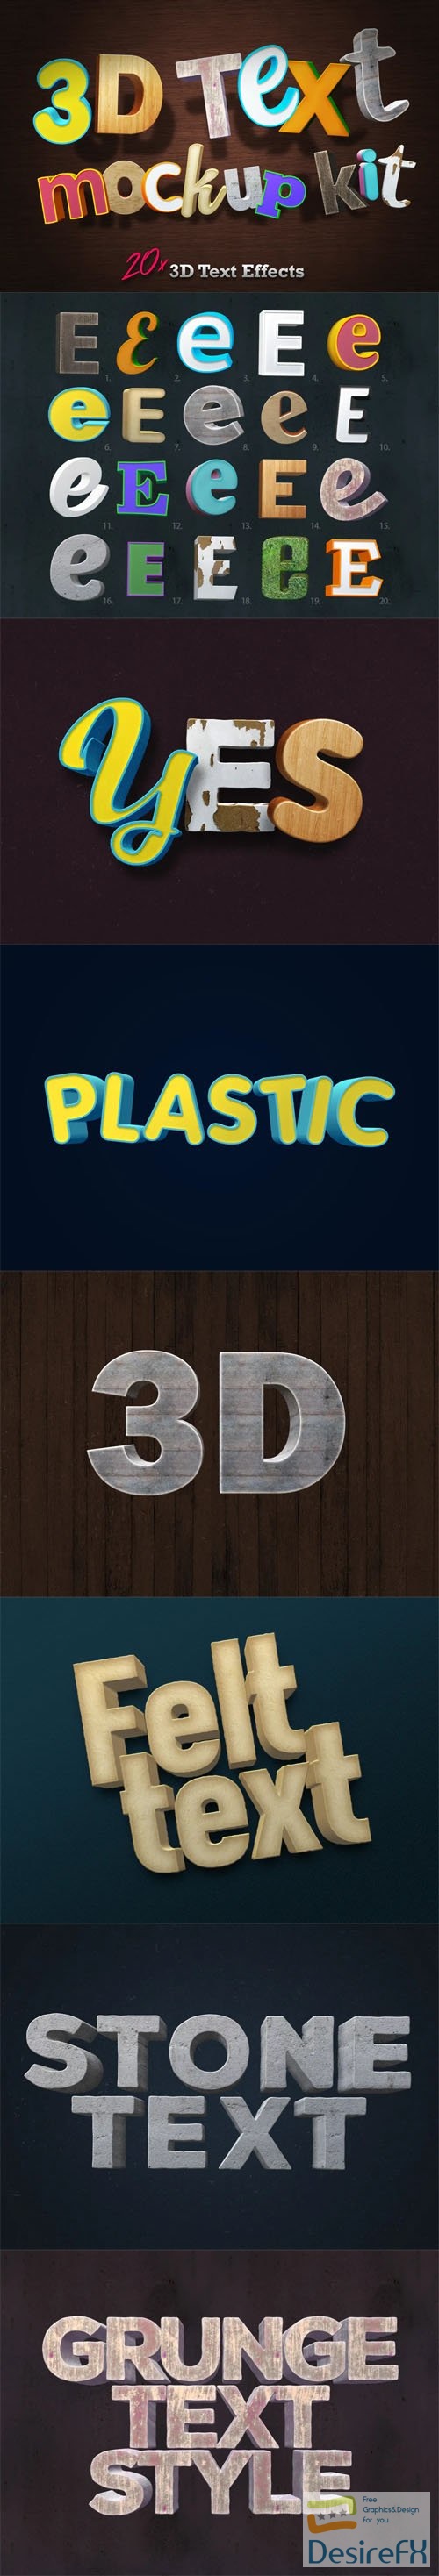 3D Text Mockup Kit - 20x 3D Text Effects